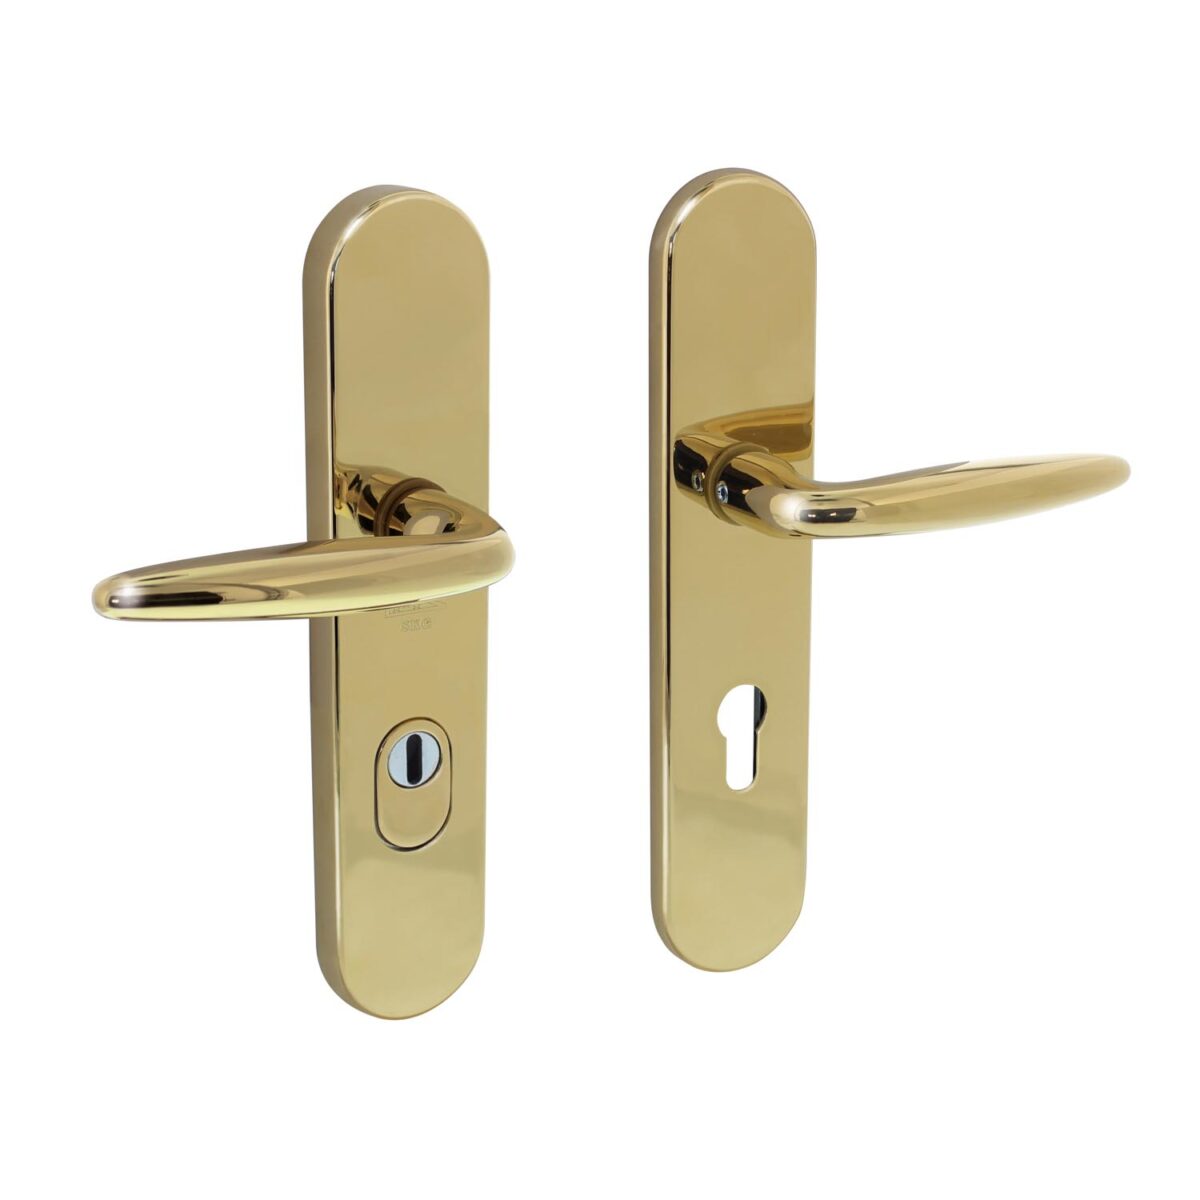 Intersteel-back door fitting-brass-lacquered_0050.385036 exterior door security fittings Door fittings Expert Lock specialist